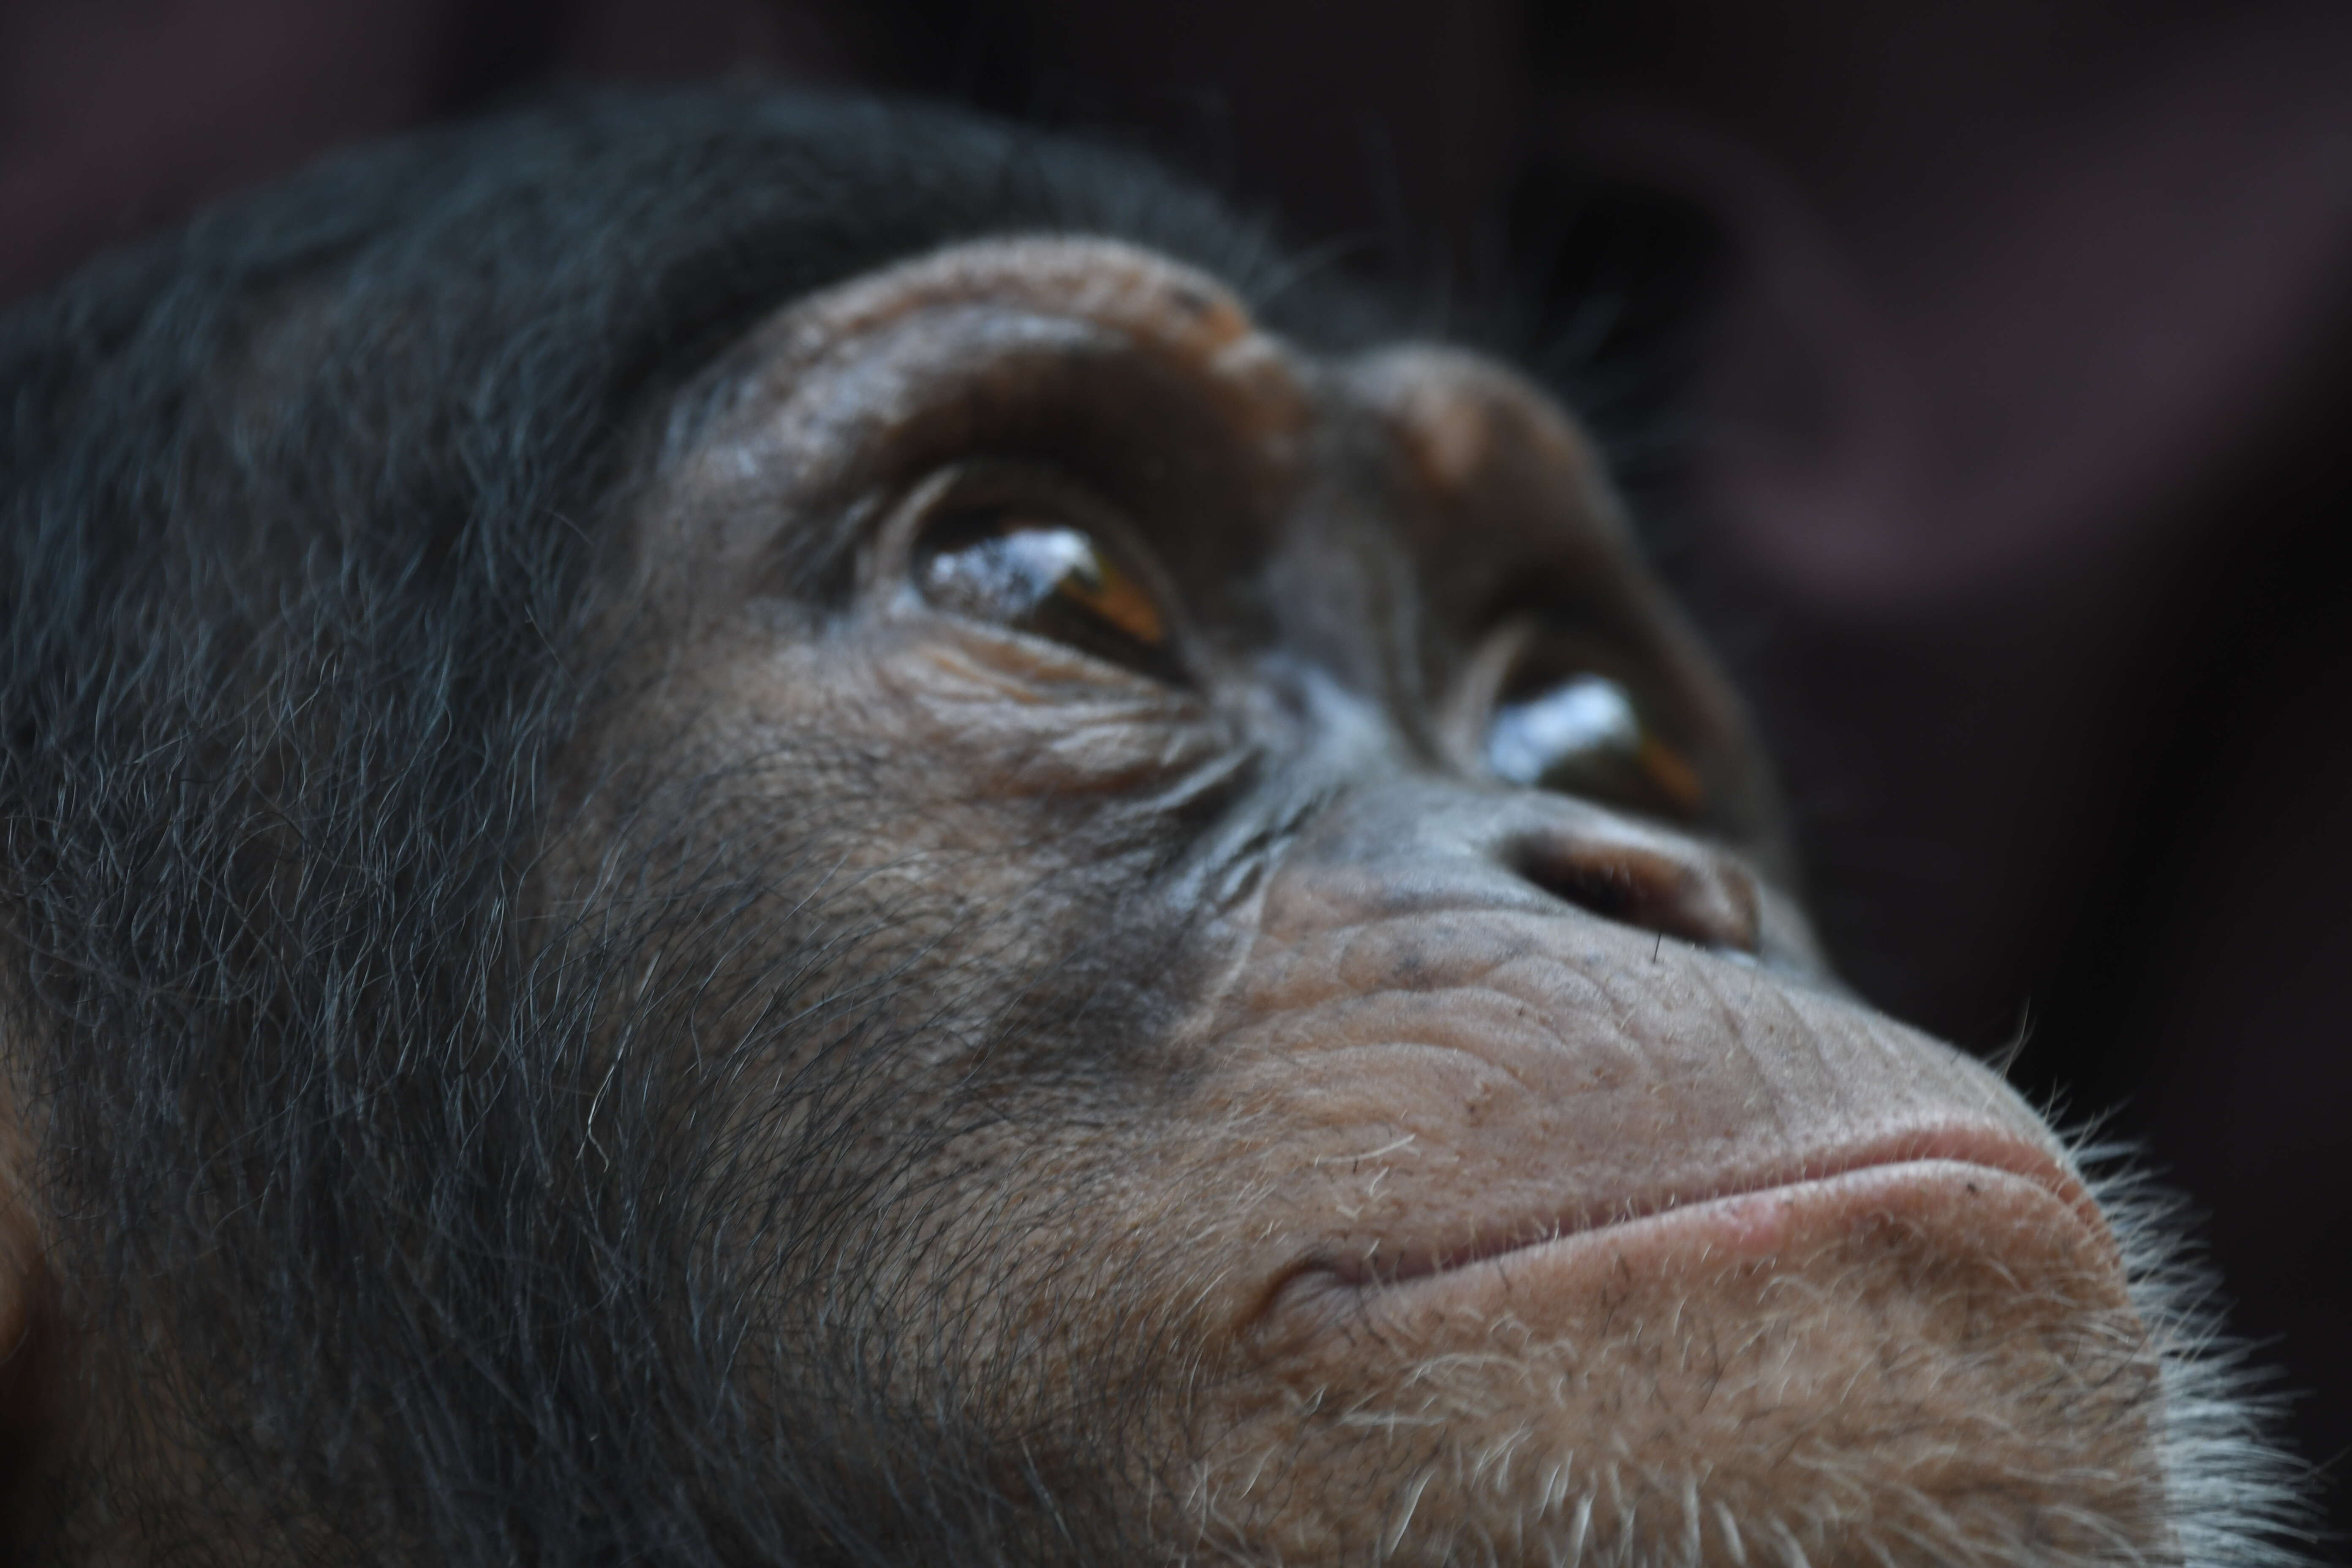 Rescued baby chimpanzee in Liberia